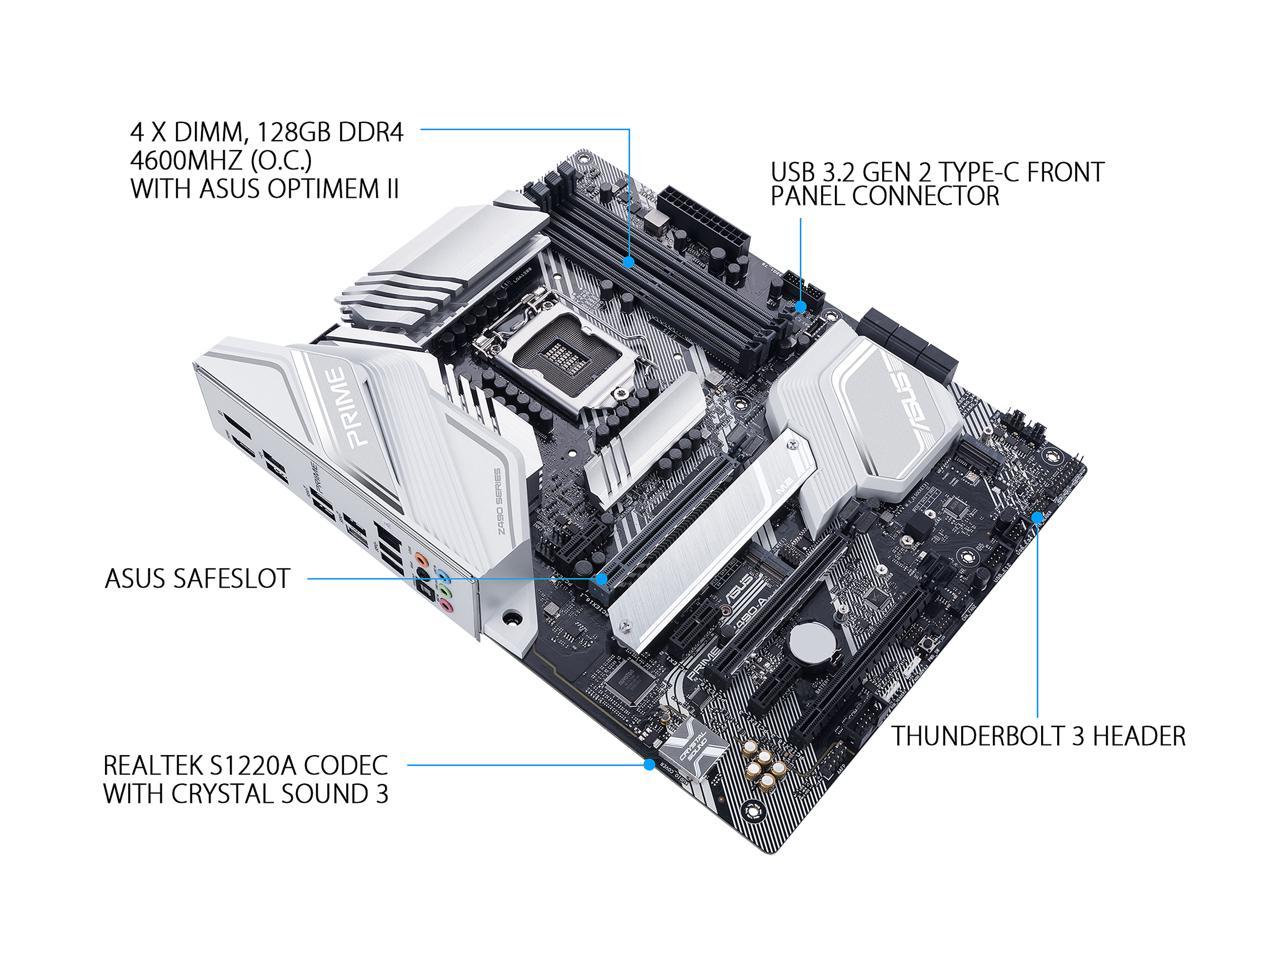 Asus Prime Z490-A Lga 1200 (Intel 10Th Gen) Intel Z490 Sata 6Gb/S Atx Intel Motherboard (14 Drmos